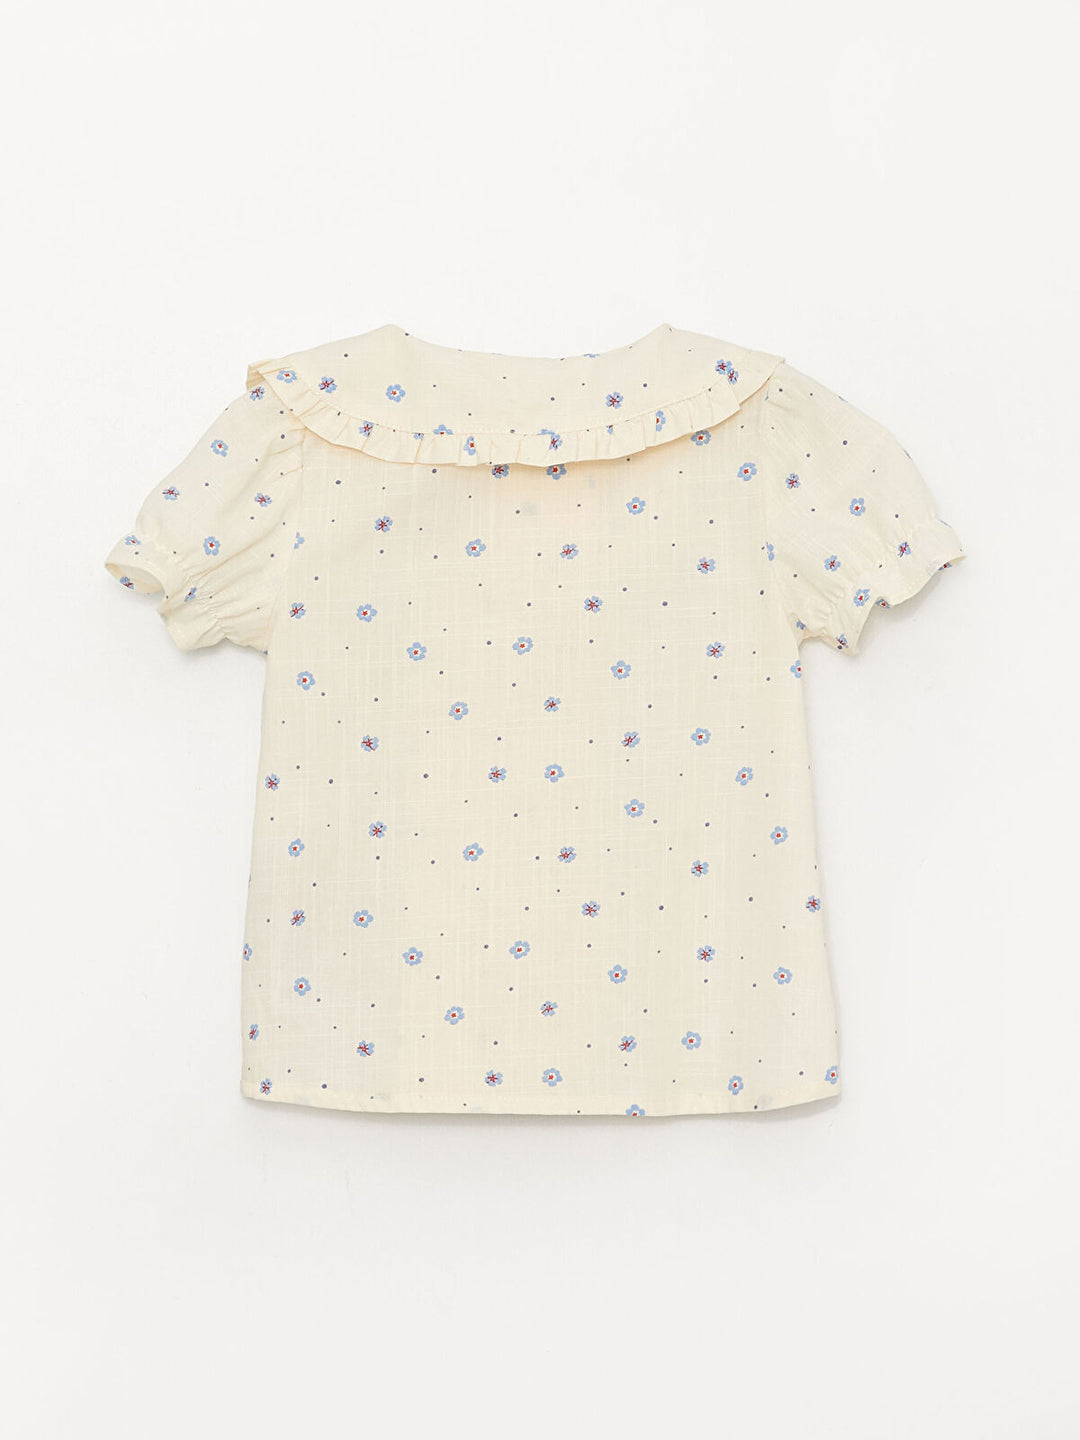 Bebe Collar Short Sleeve Patterned Baby Girl Shirt